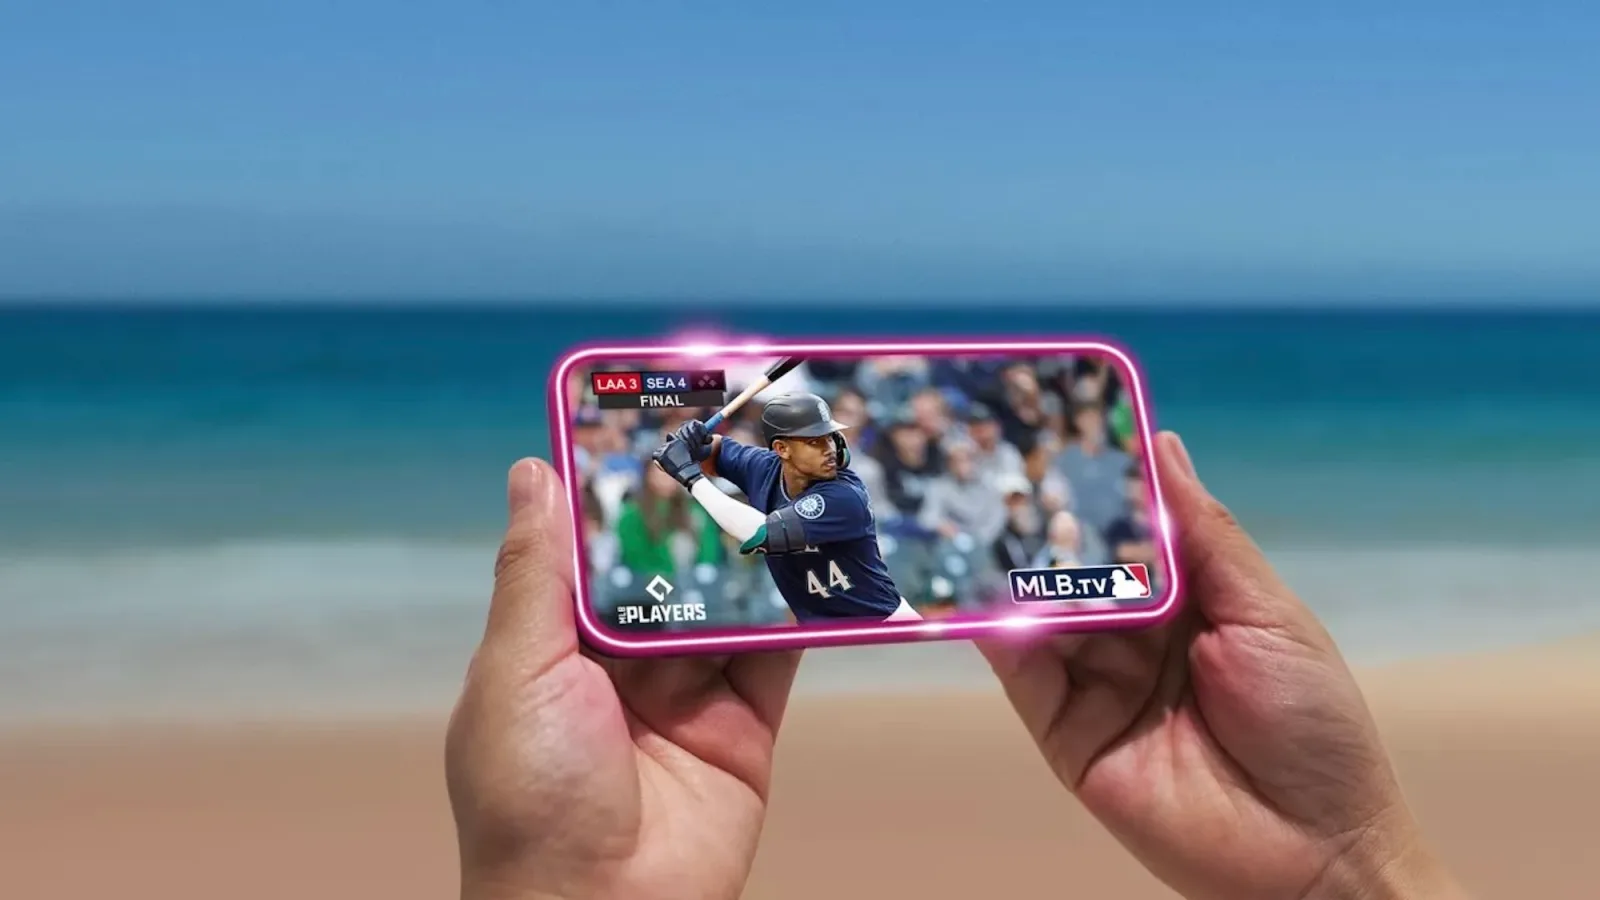 T-Mobile Memperpanjang Kemitraan dengan Major League Baseball Hingga 2028